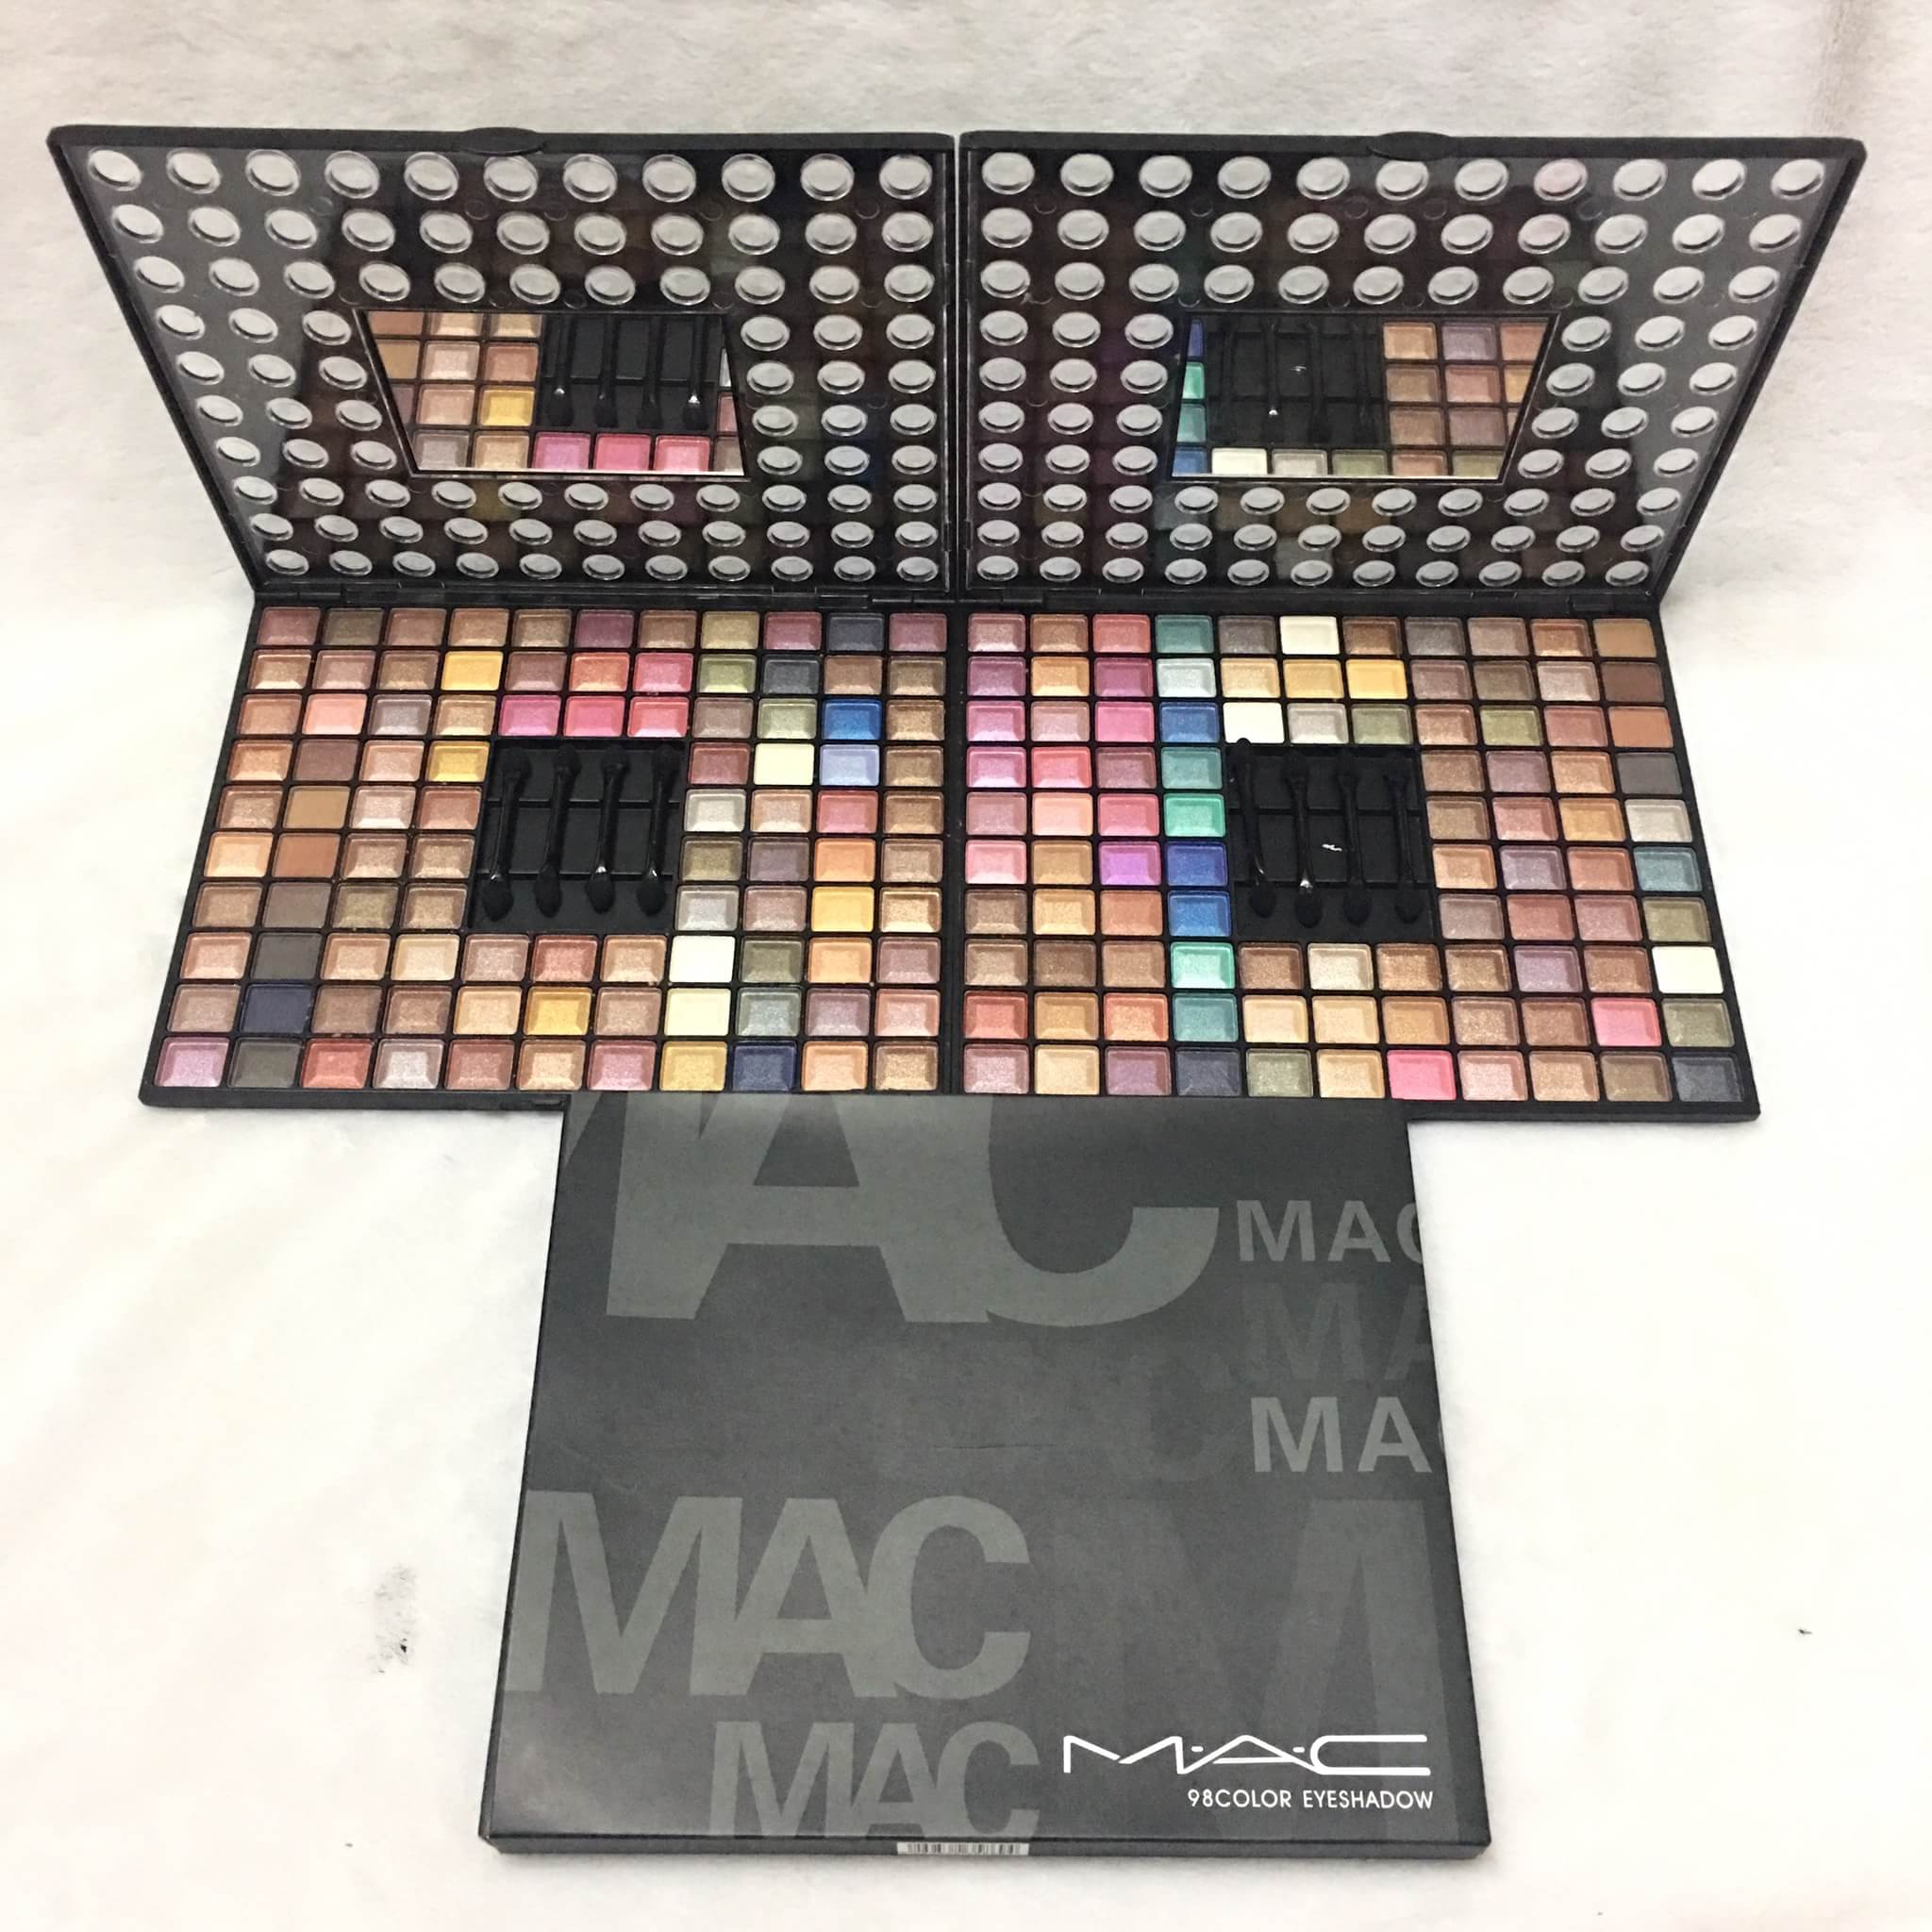 M.A.C. 98 color eyeshadow